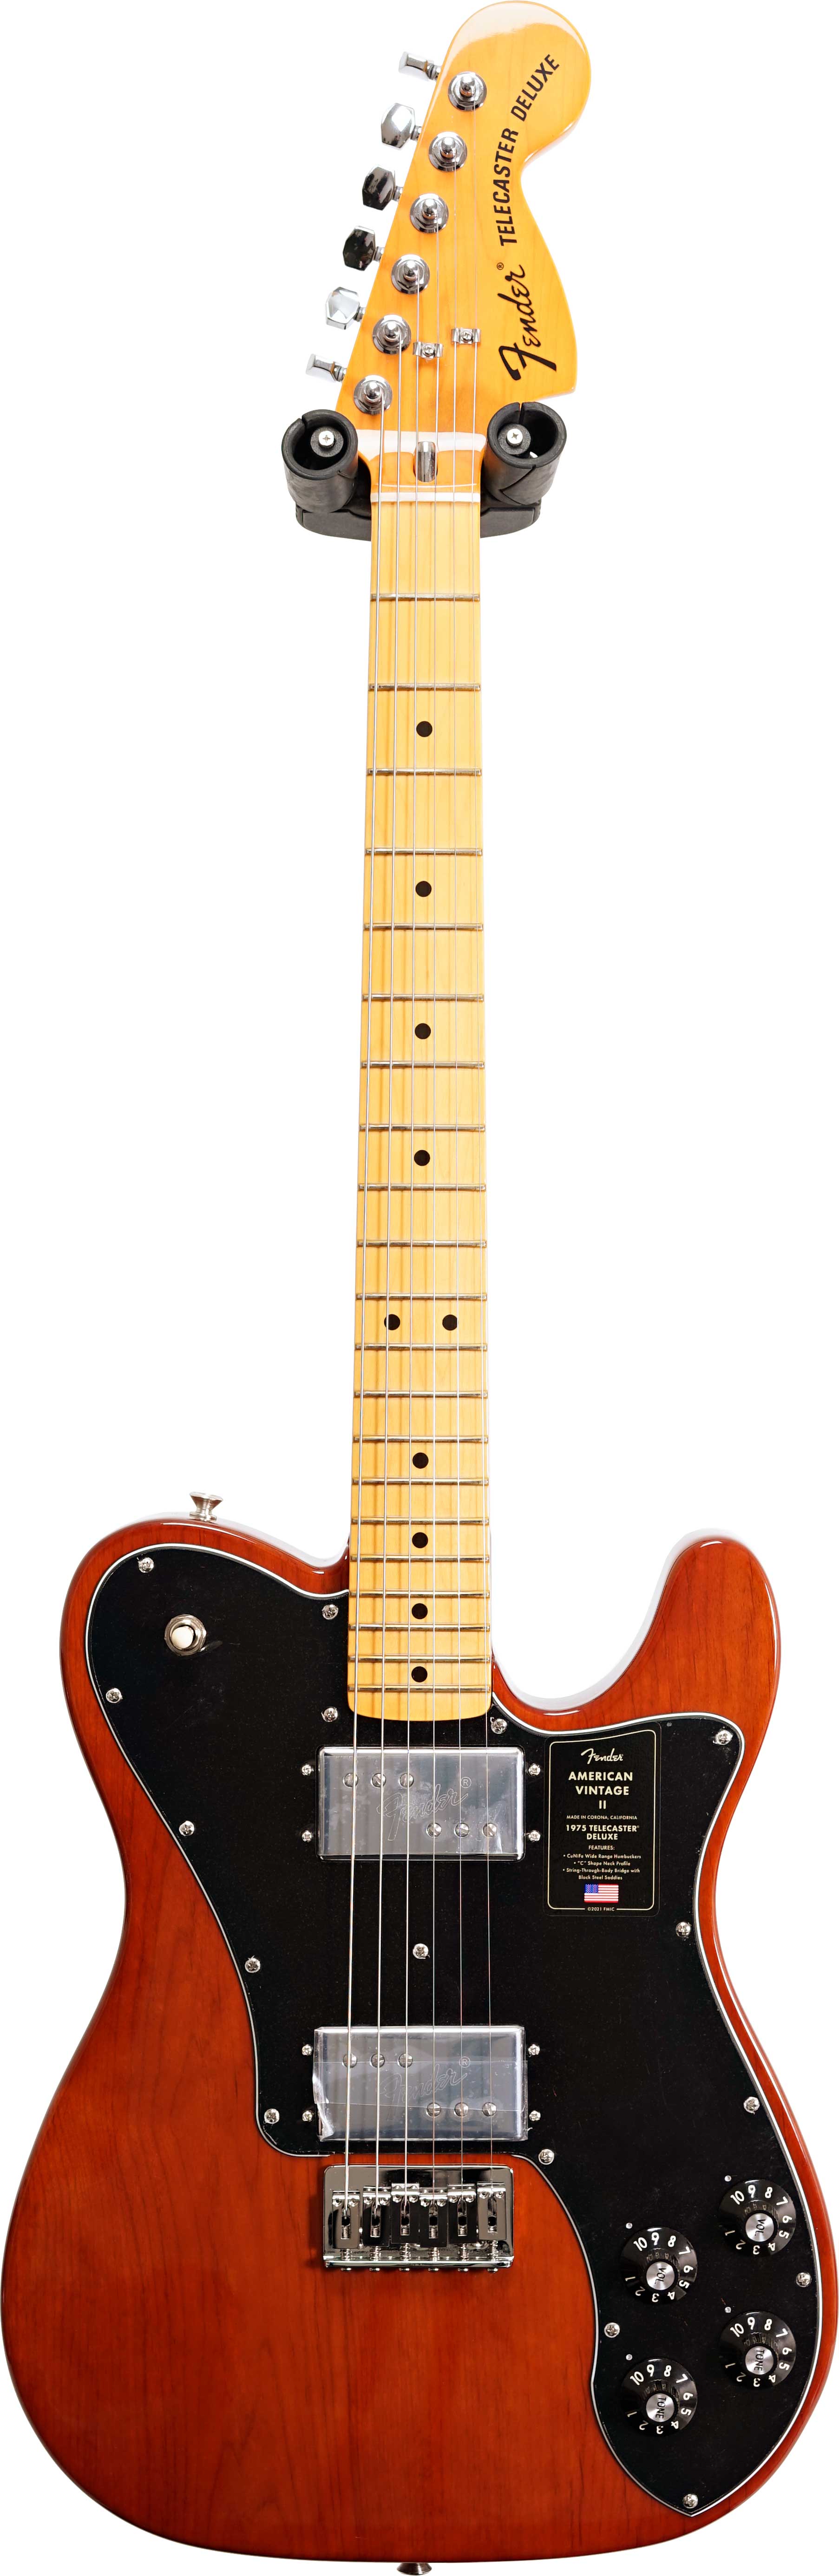 Fender American Vintage II 1975 Telecaster Deluxe Maple